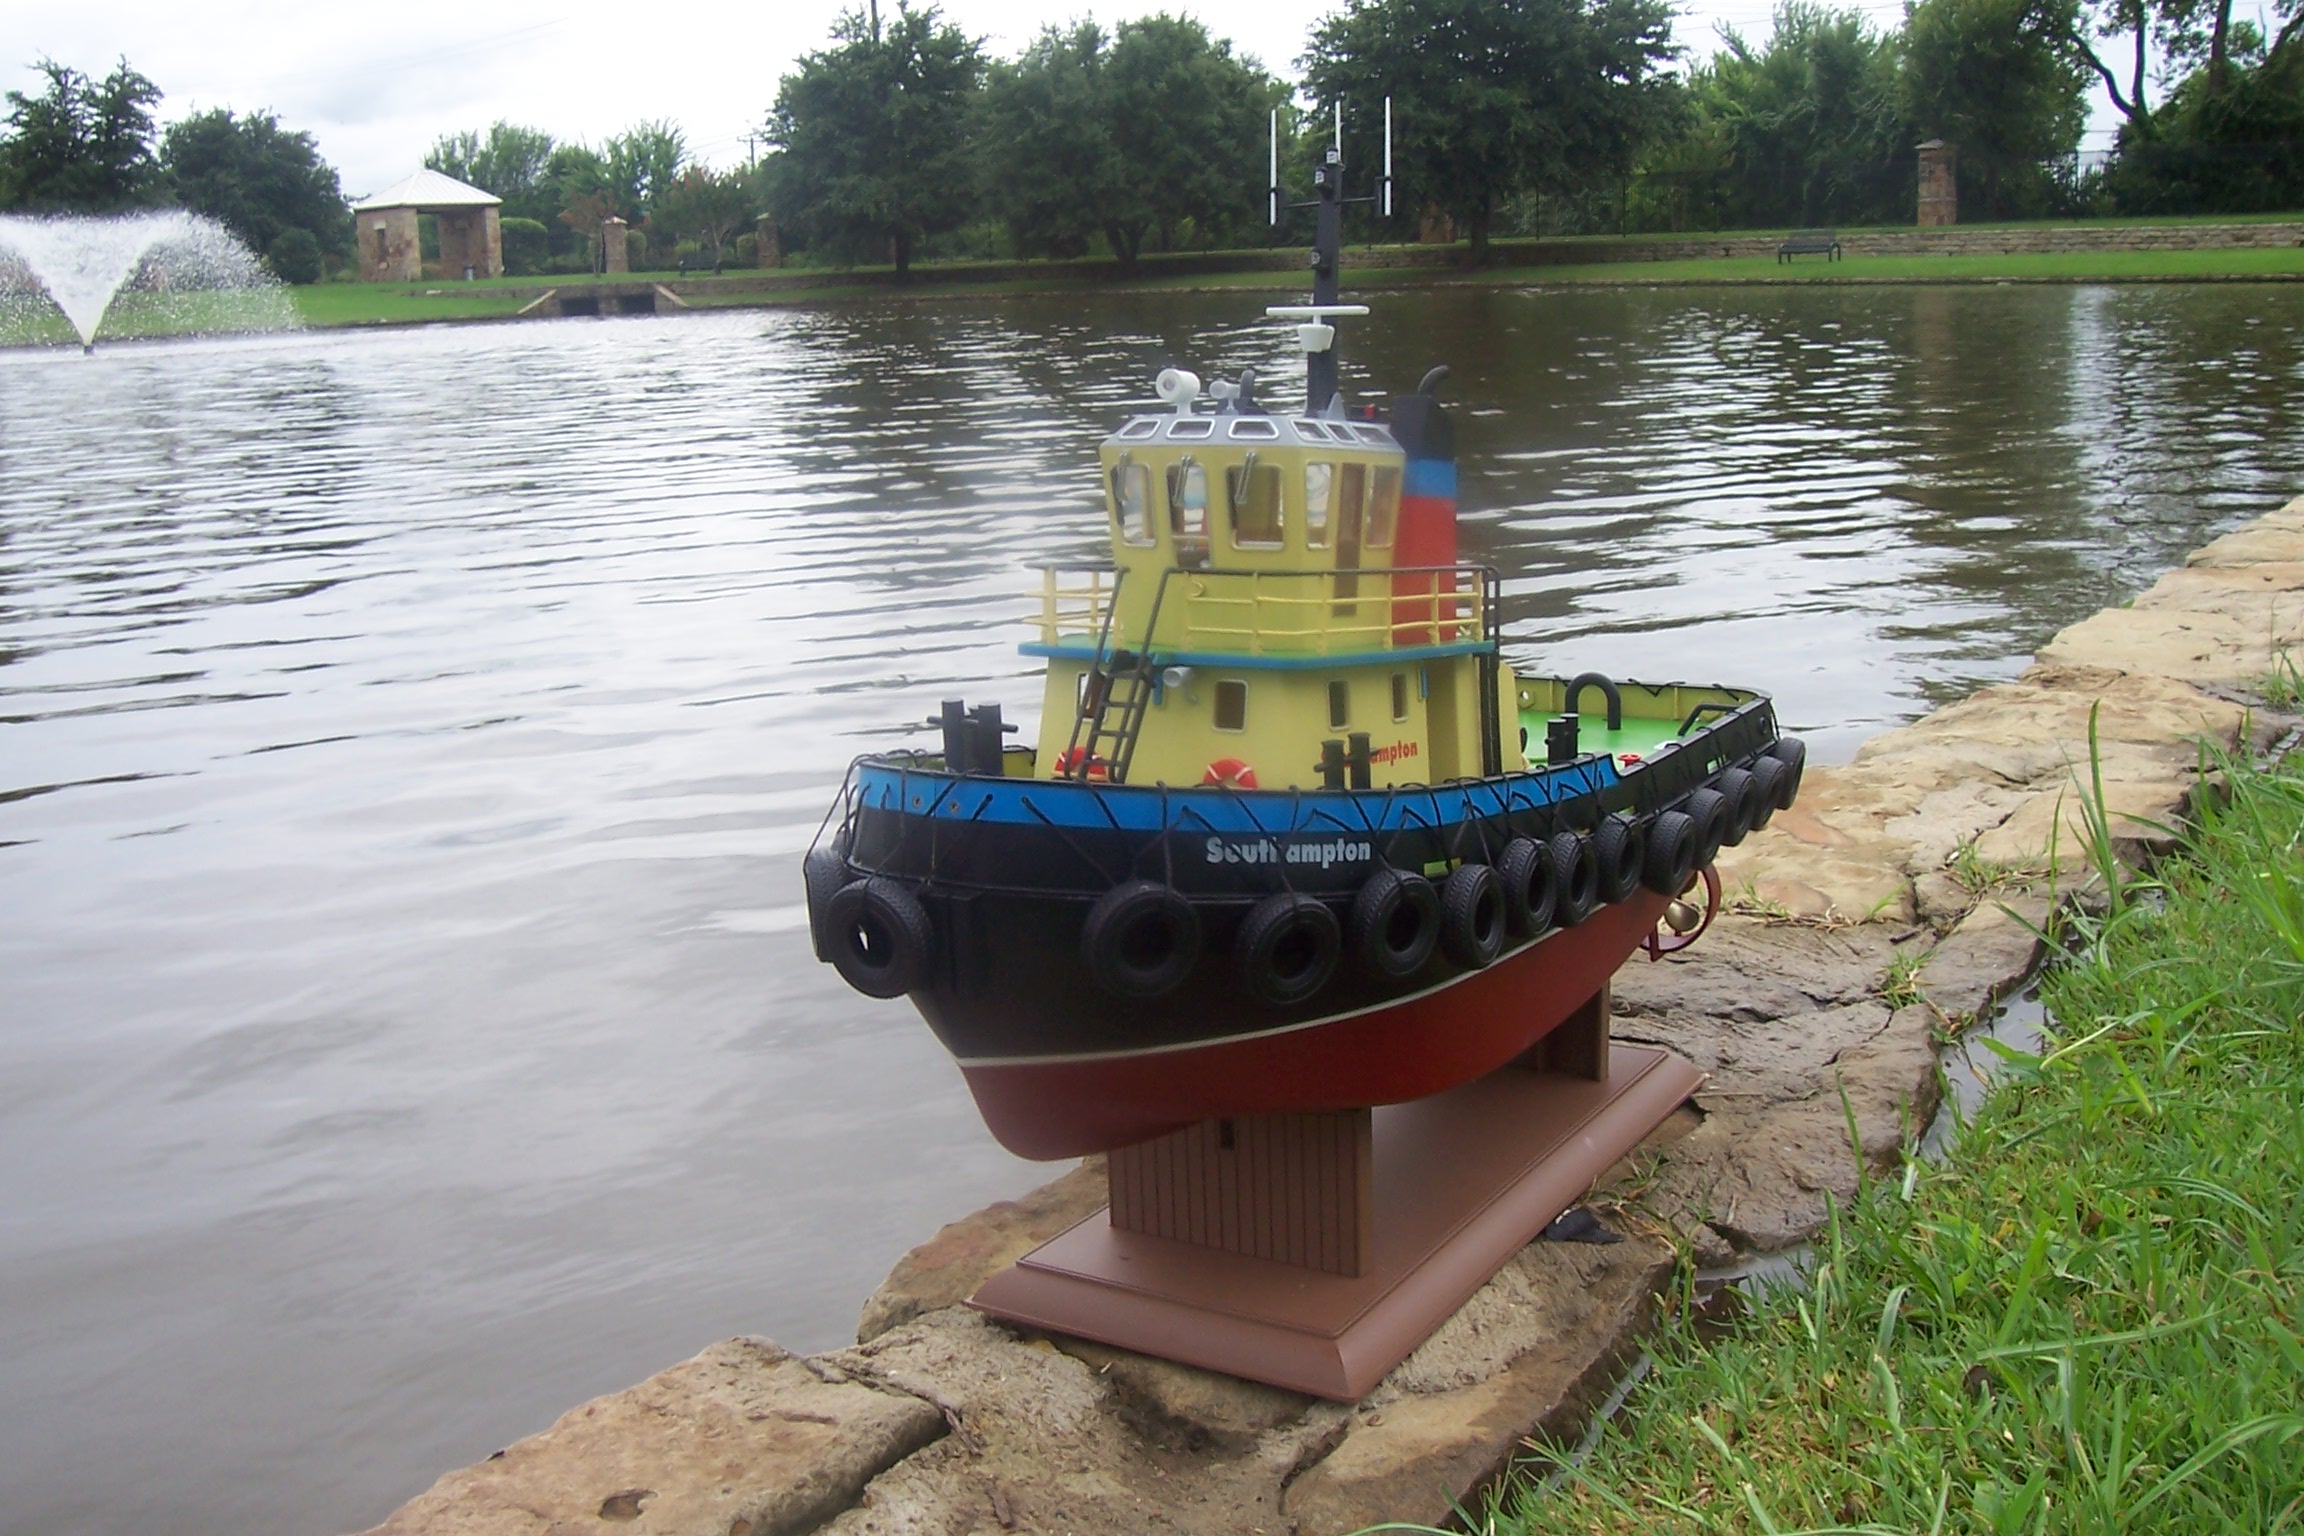 The Scale Modeler - RC WyeForce Southhapton Tug Boat